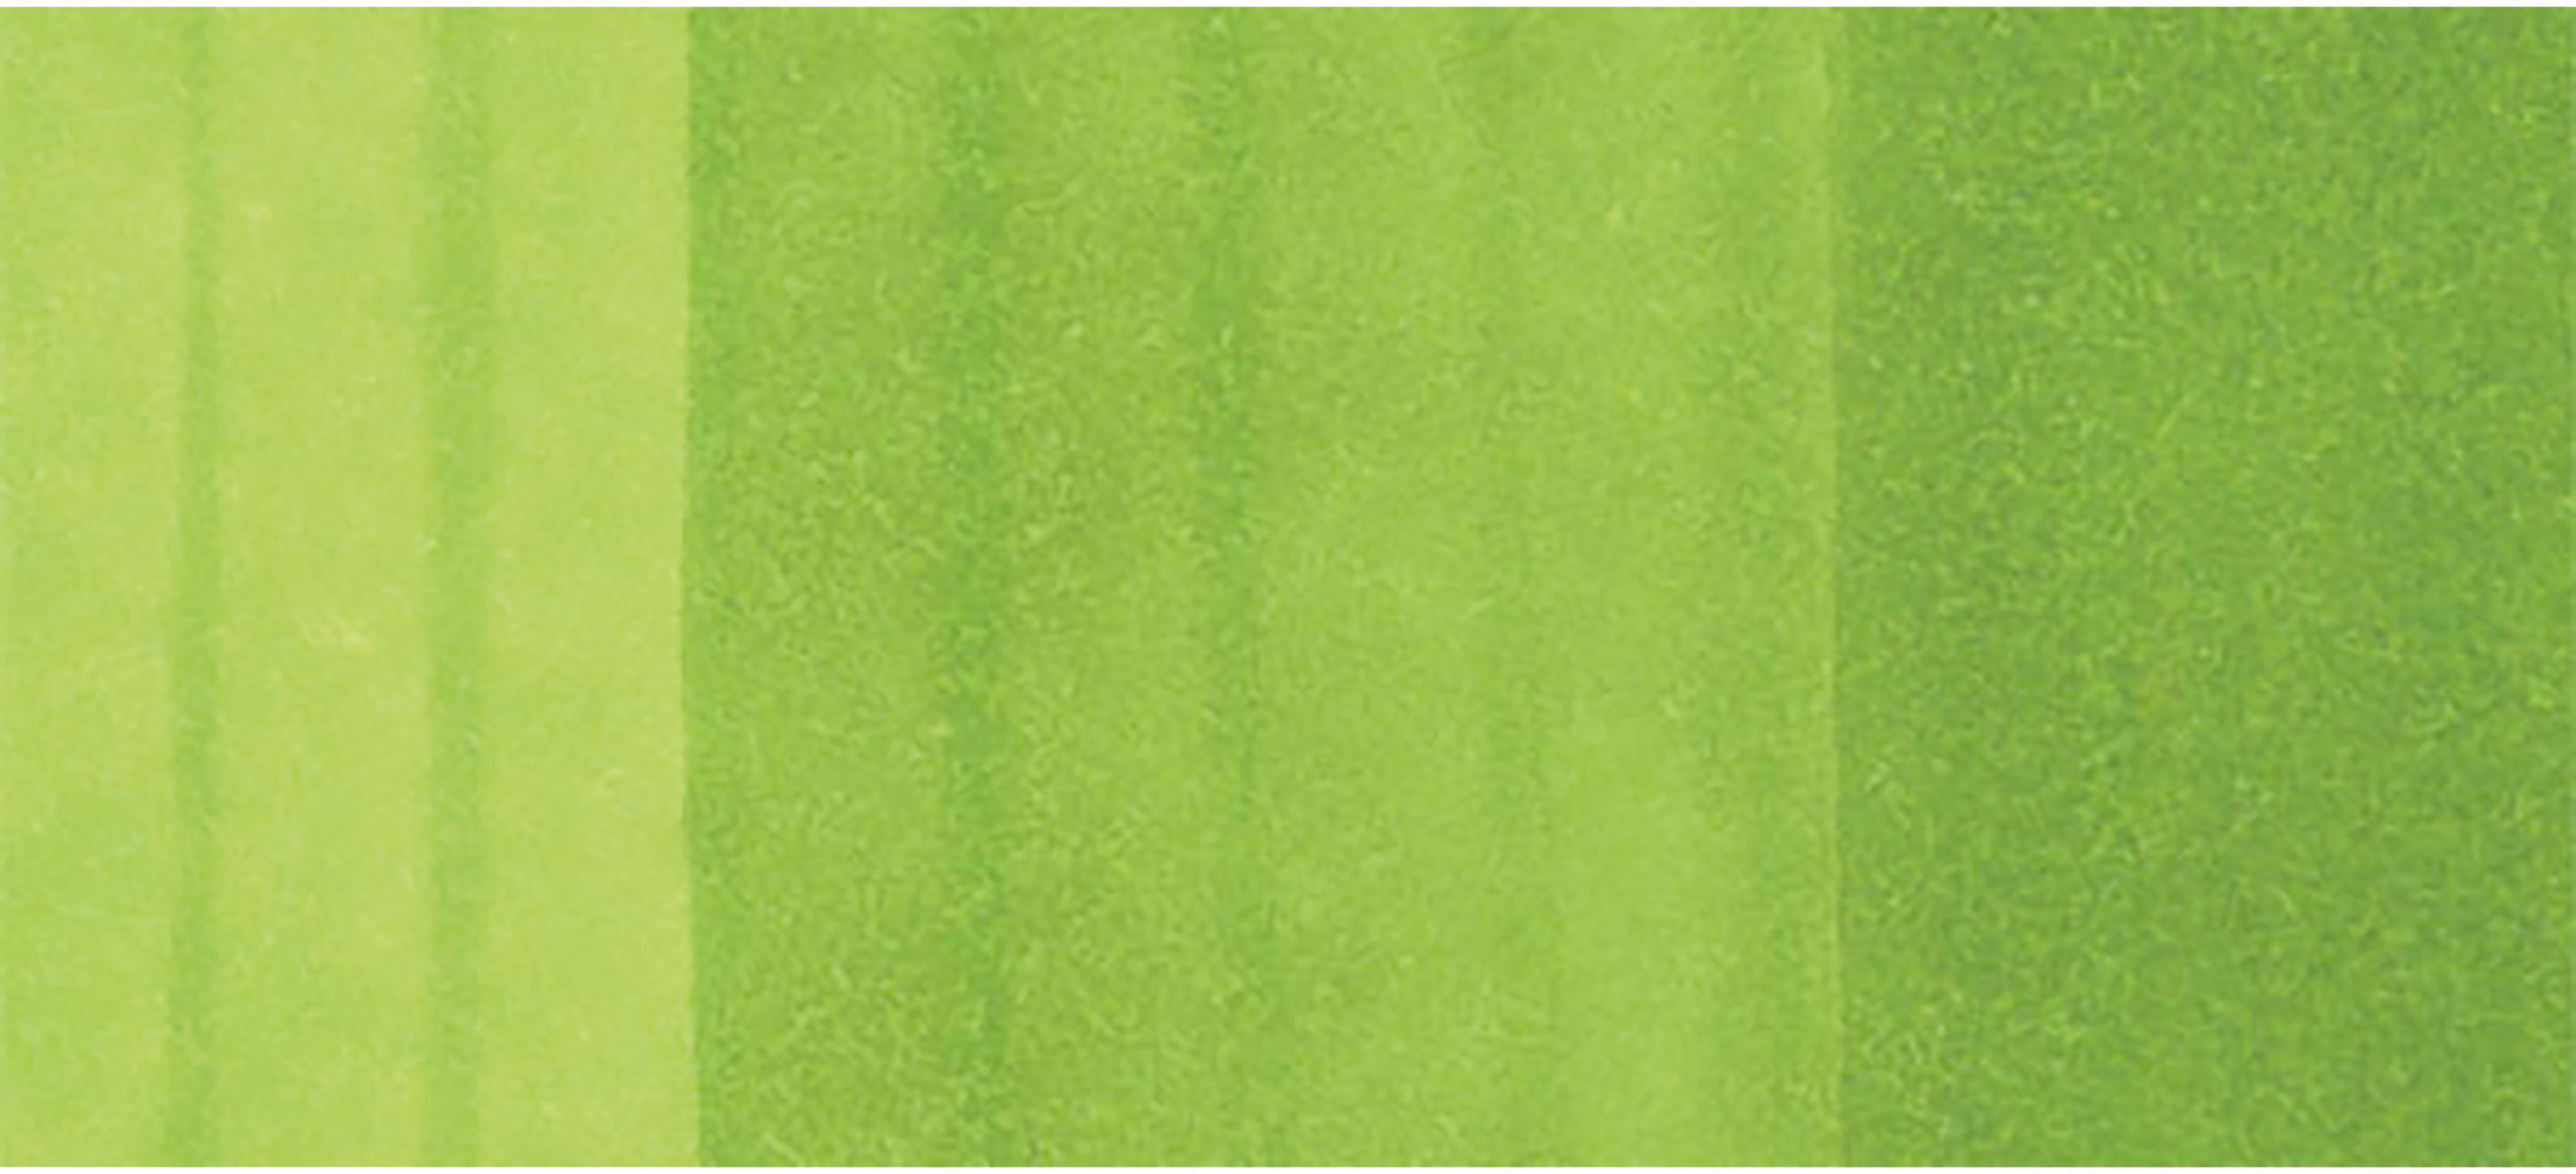 COPIC Marker Sketch 21075201 YG25 - Celadon Green